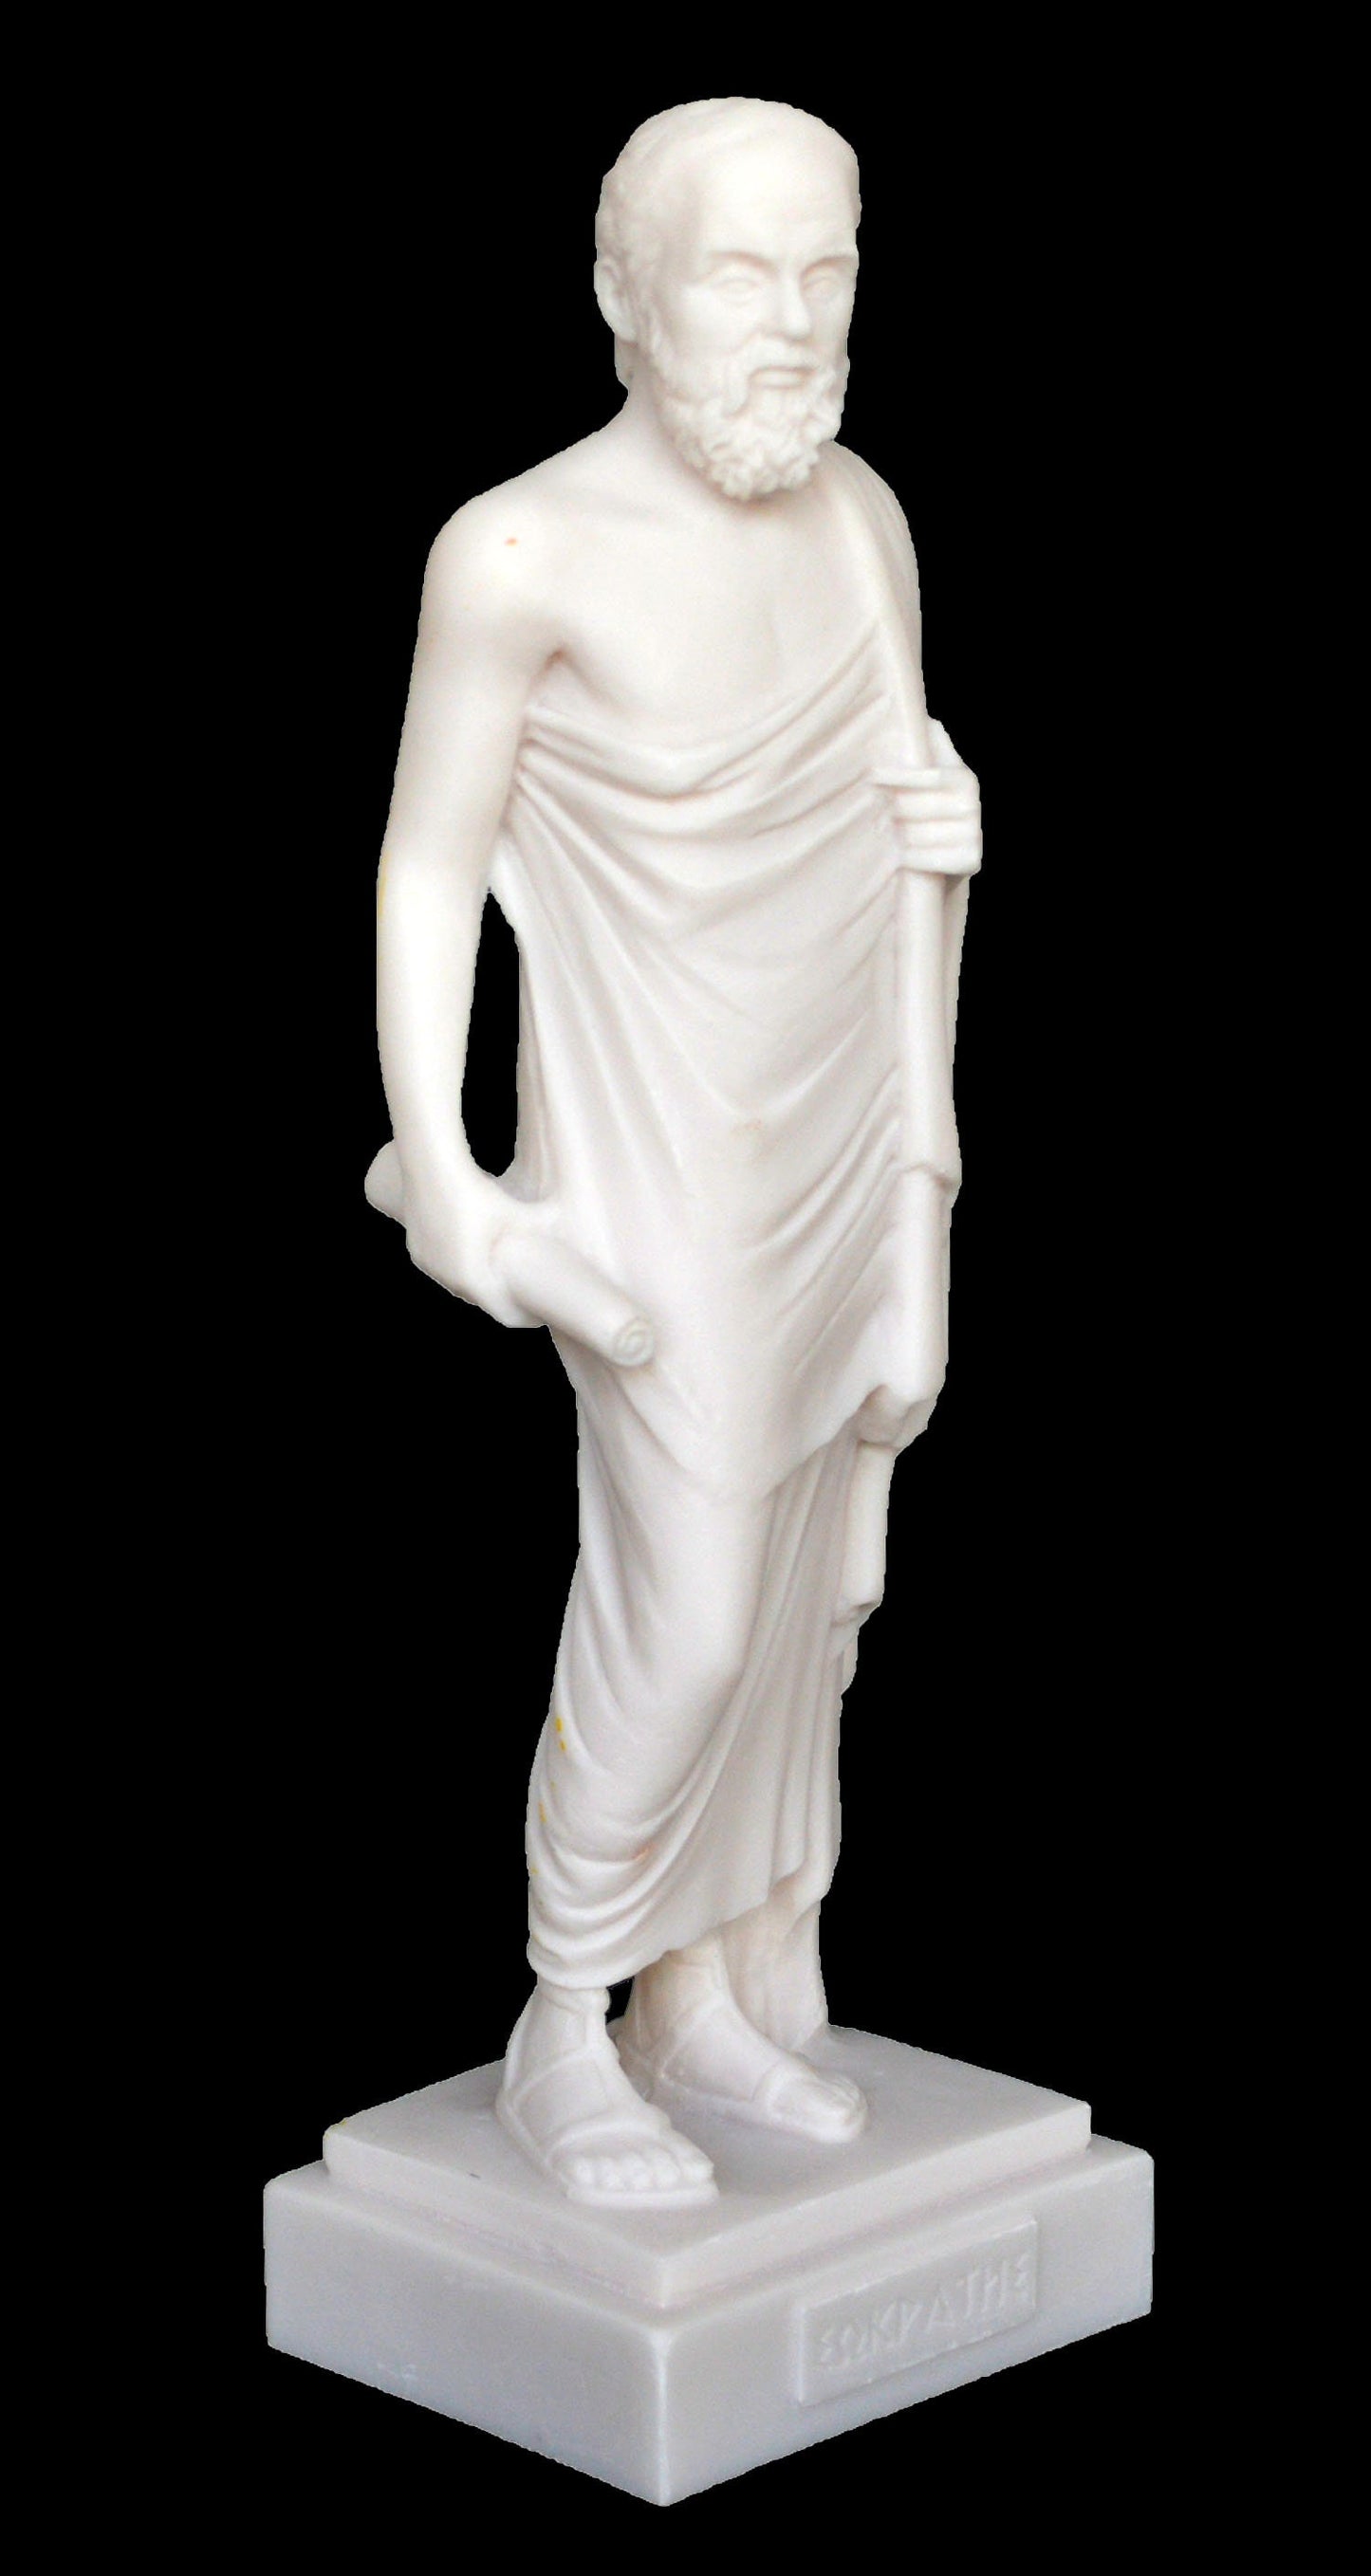 Socrates - Ancient Greek Philosopher - 470-399 BC - Teacher of Plato - Father of Western Philosophy - Alabaster Statue Sculpture